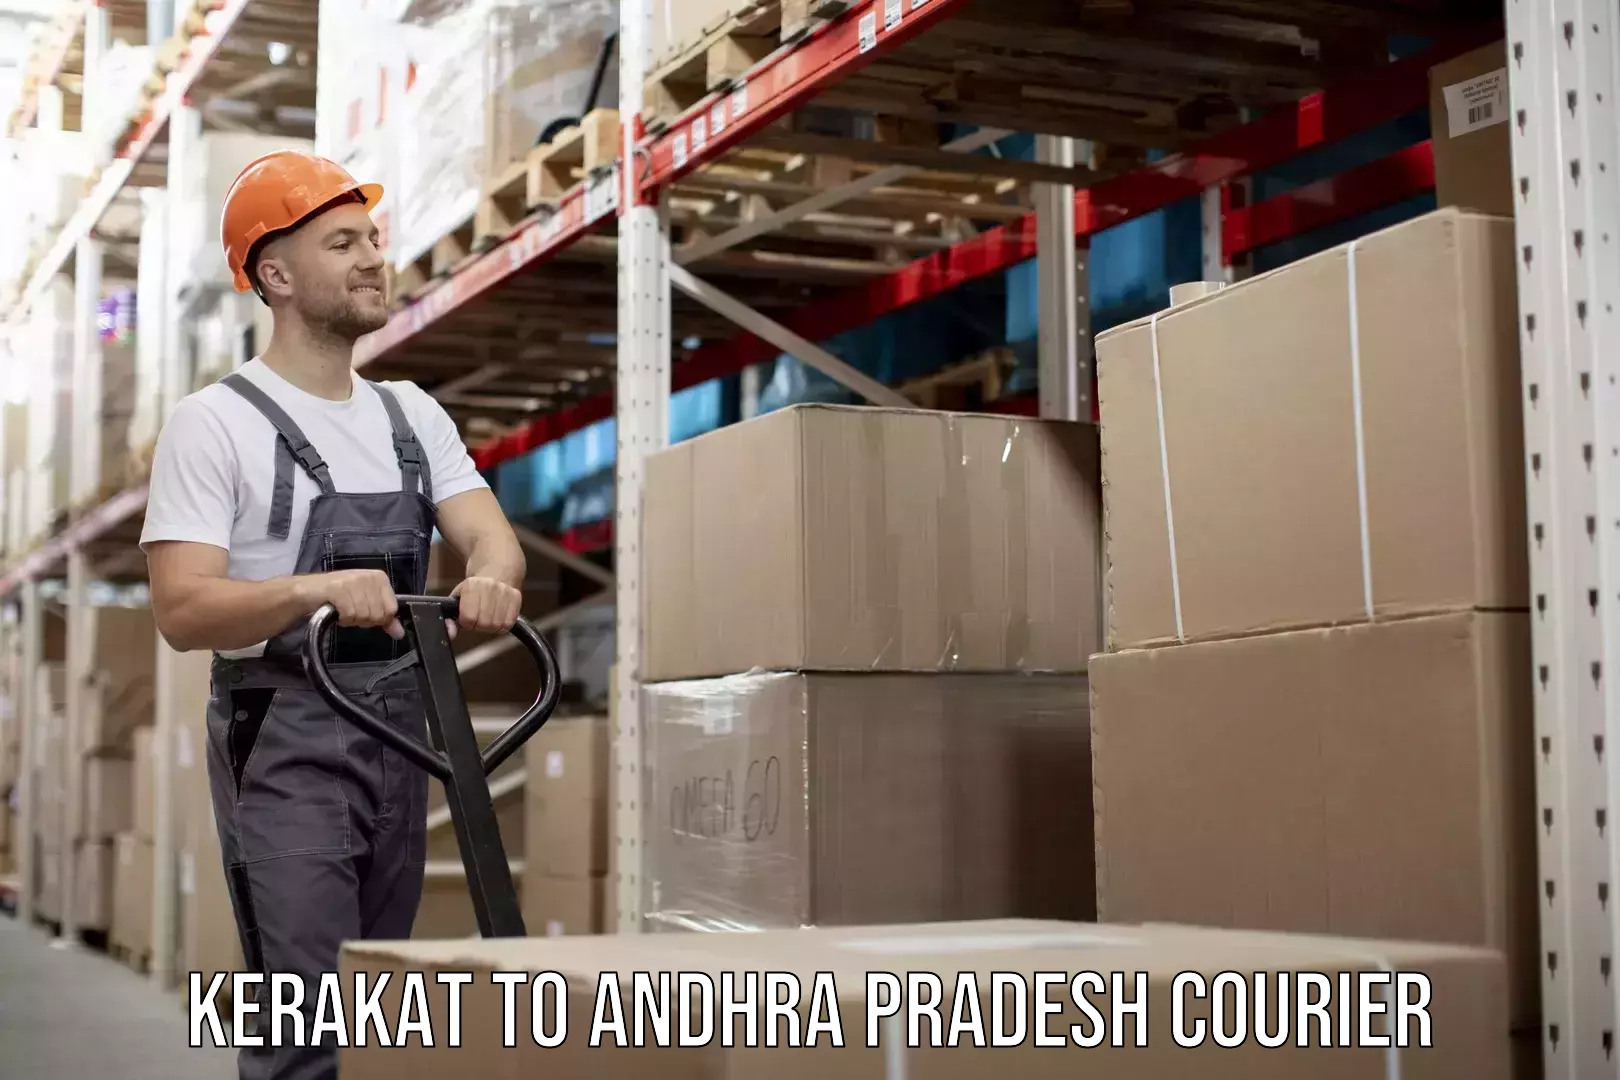 Moving and handling services Kerakat to Andhra Pradesh